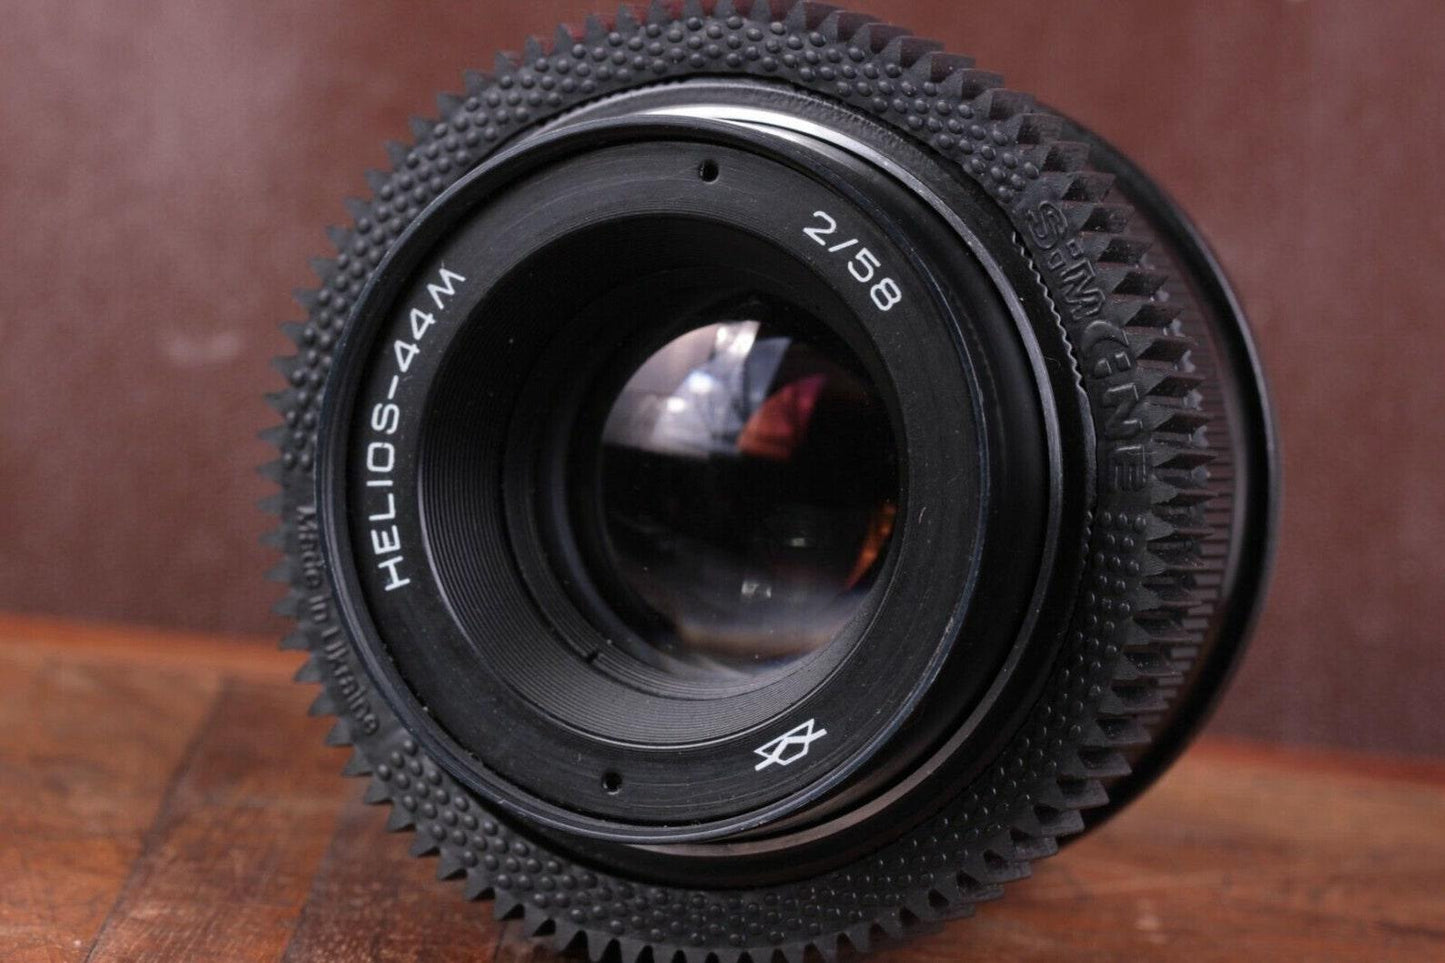 Helios 44M Soviet lens 58mm f/2 M42 mount Canon EF EOS adaptor.